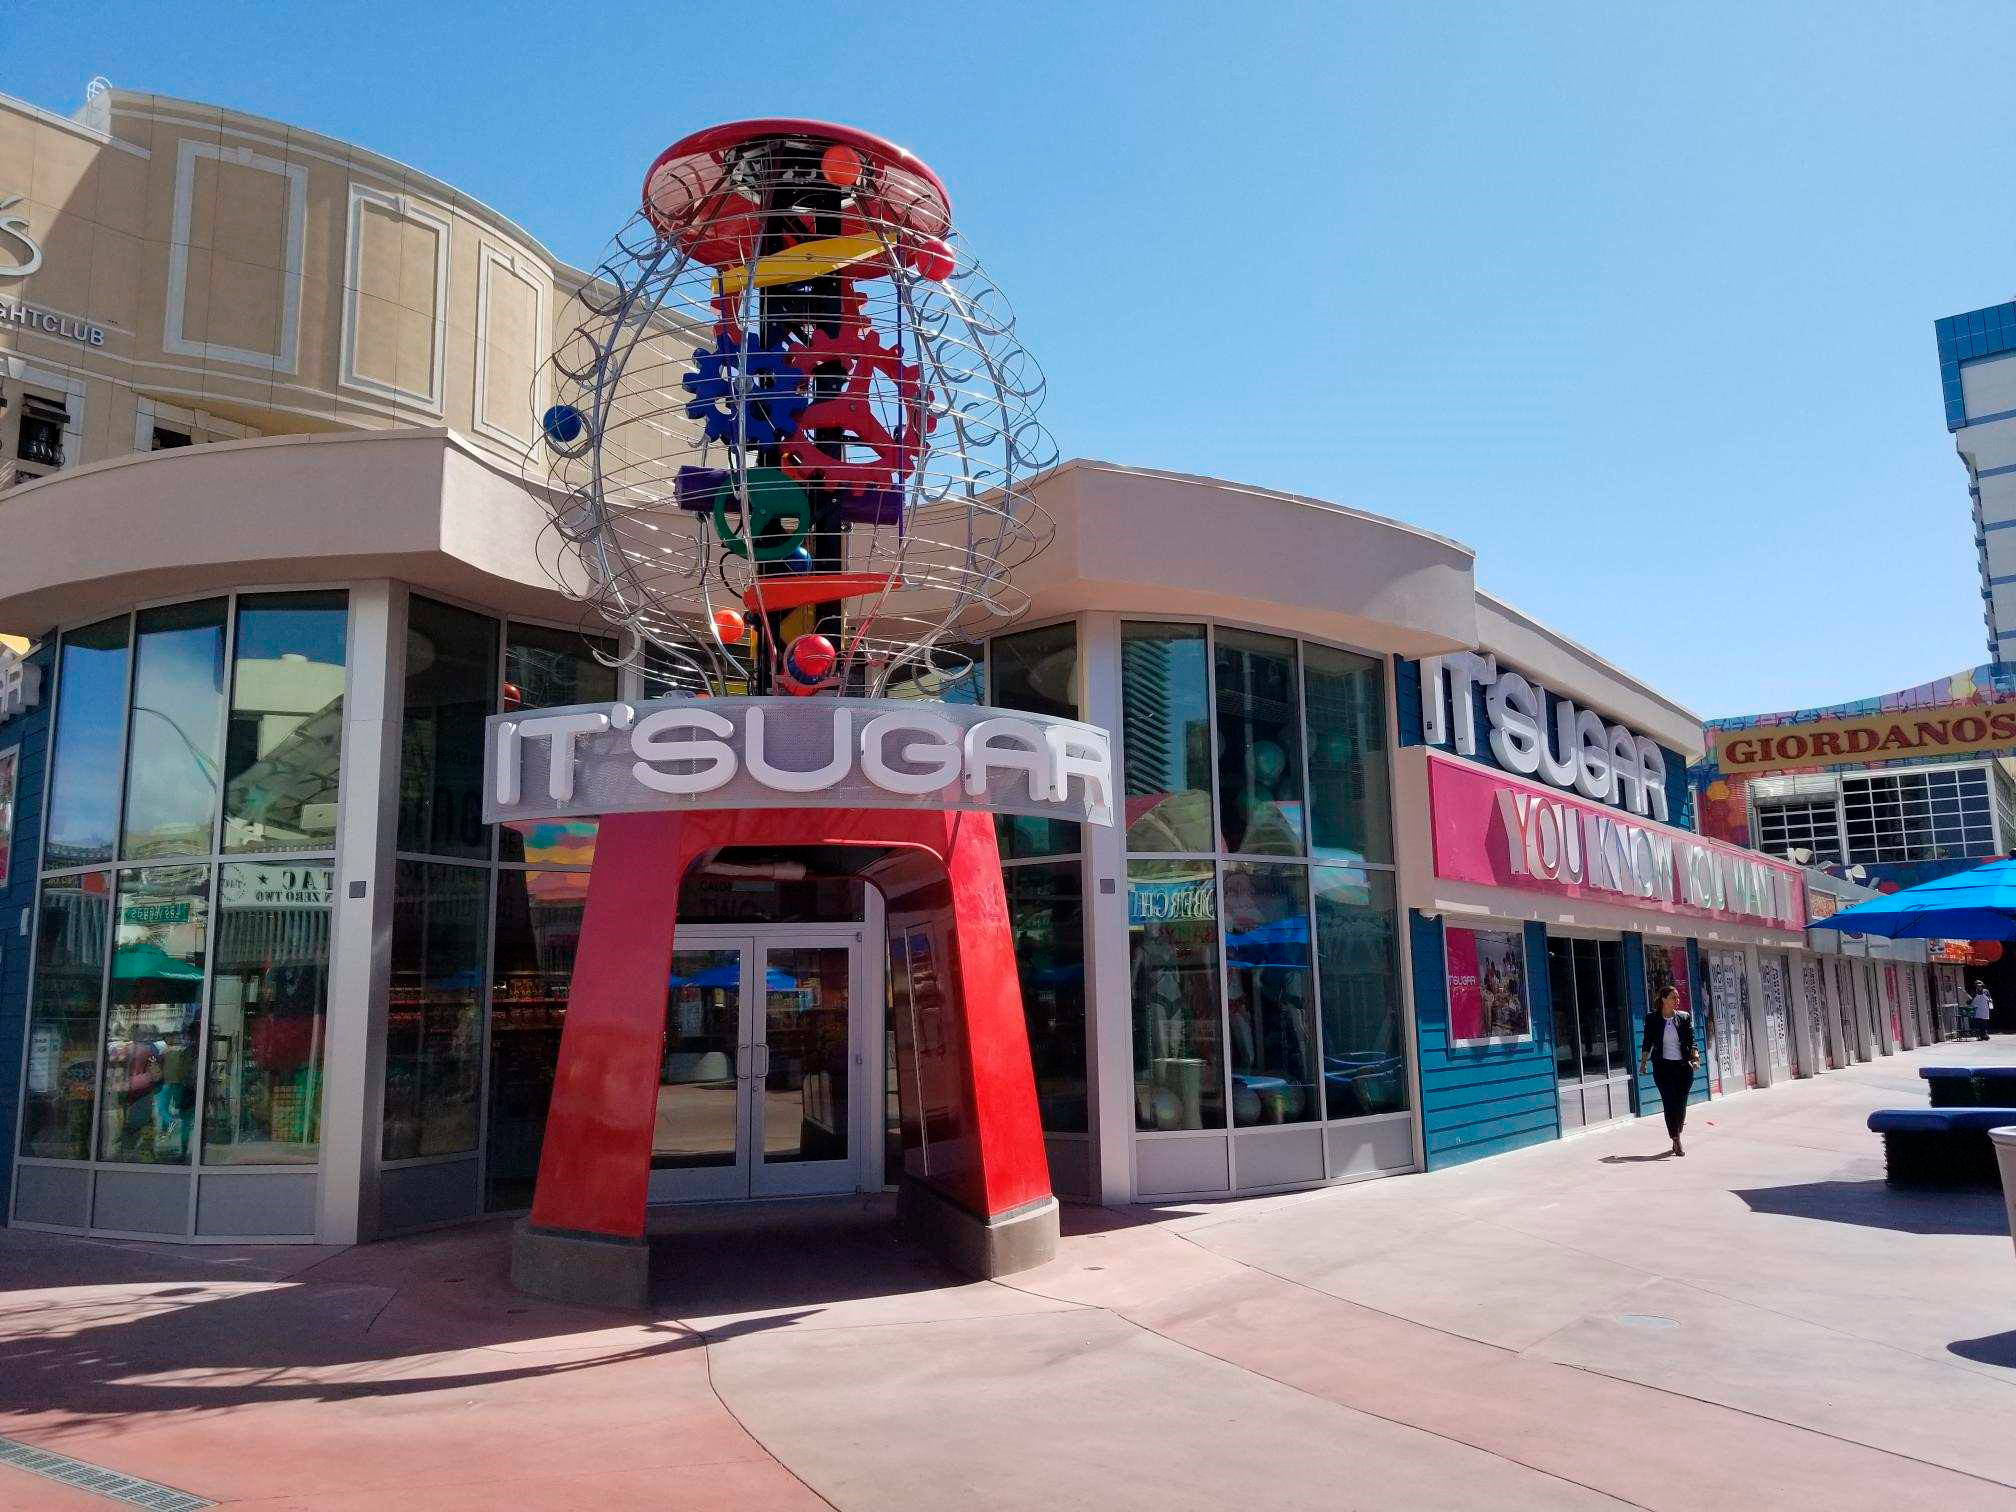 IT'SUGAR Opens Flagship Store on The Las Vegas Strip